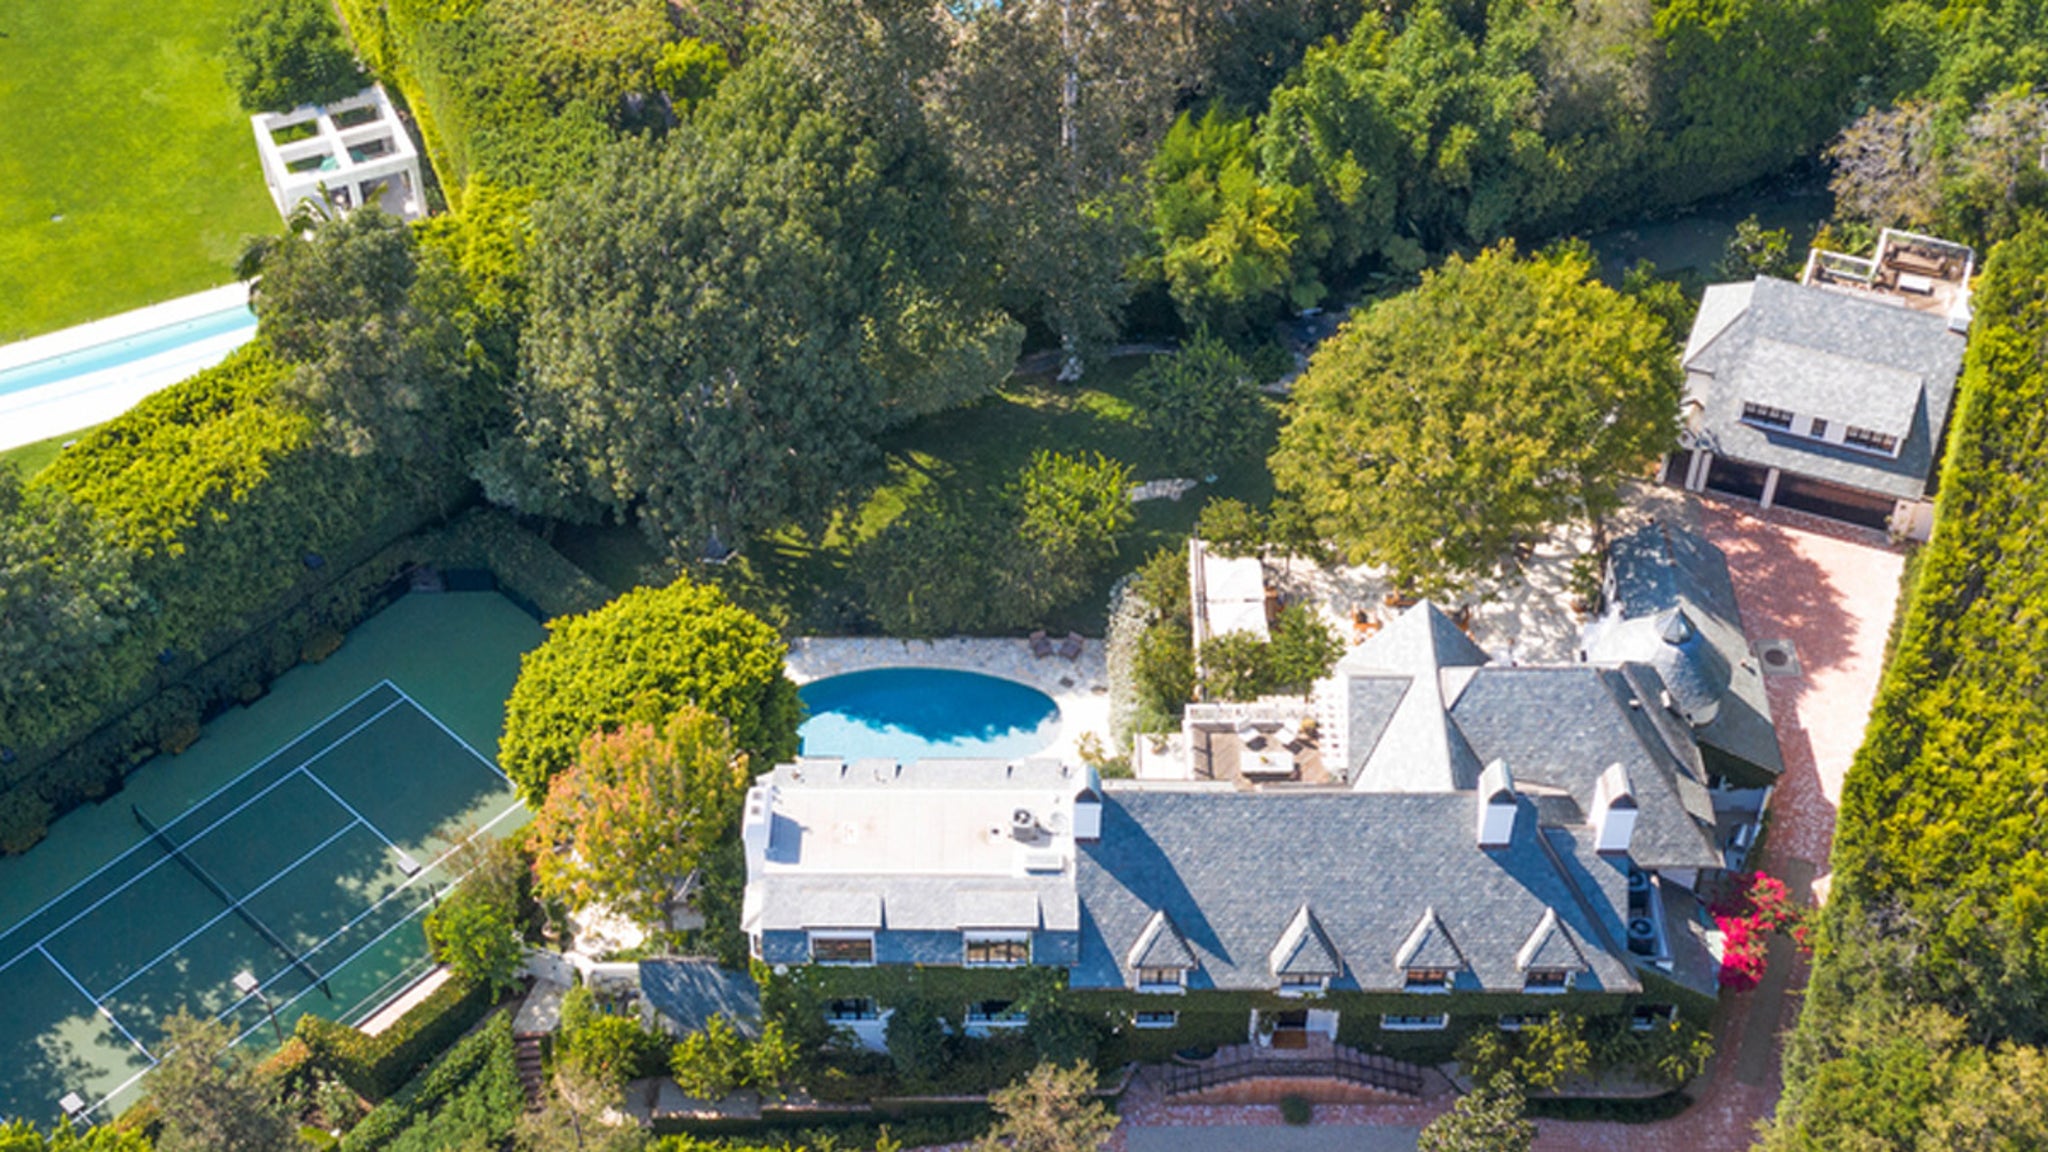 Ellen DeGeneres Downloading Bev Hills Mansion Purchased From Adam Levine